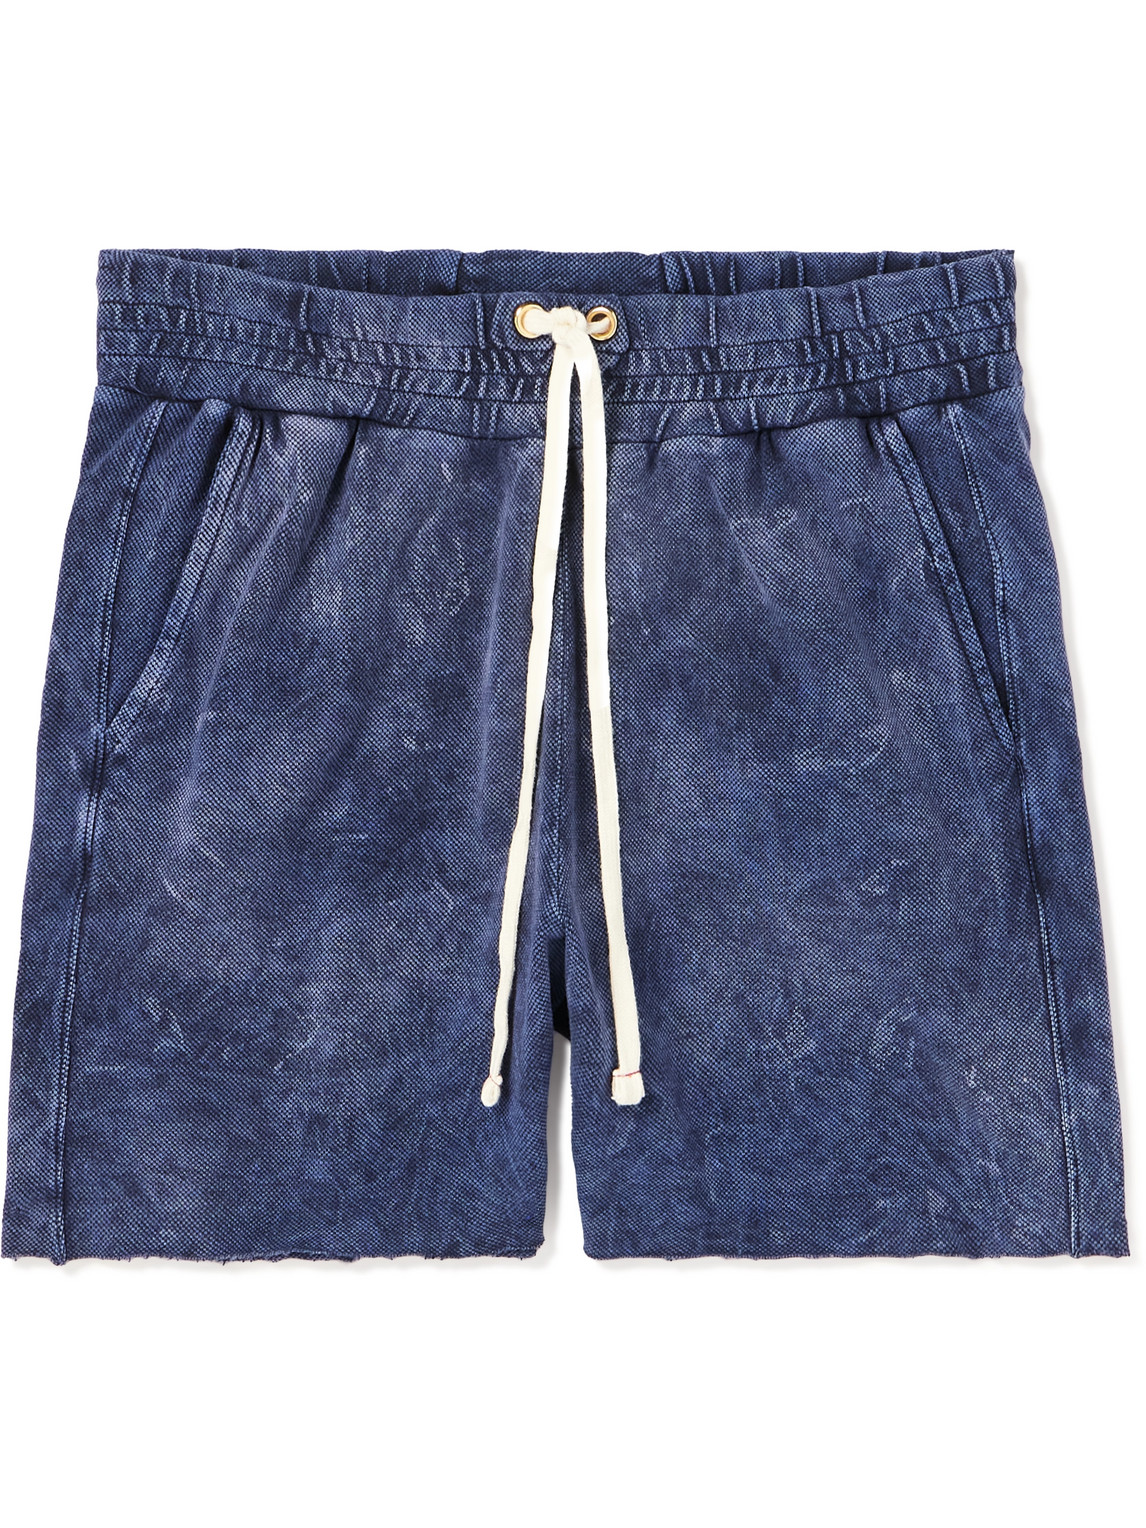 Yacht Straight-Leg Garment-Dyed Cotton-Jersey Drawstring Shorts